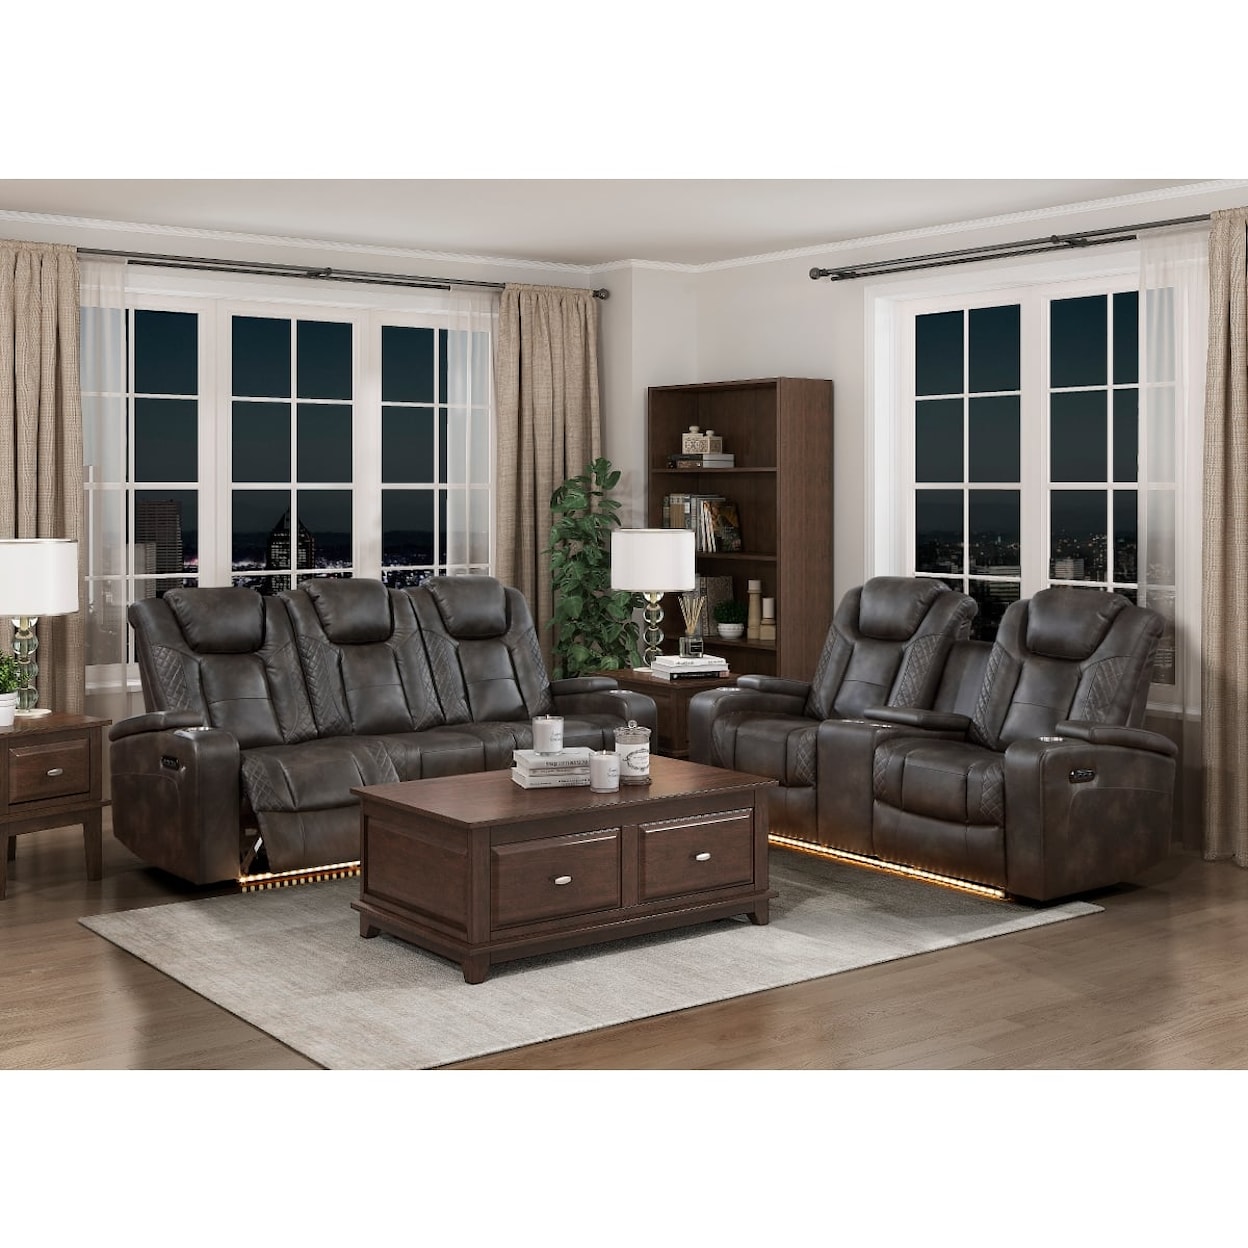 Homelegance Furniture Homelegance Double Reclining Sofa